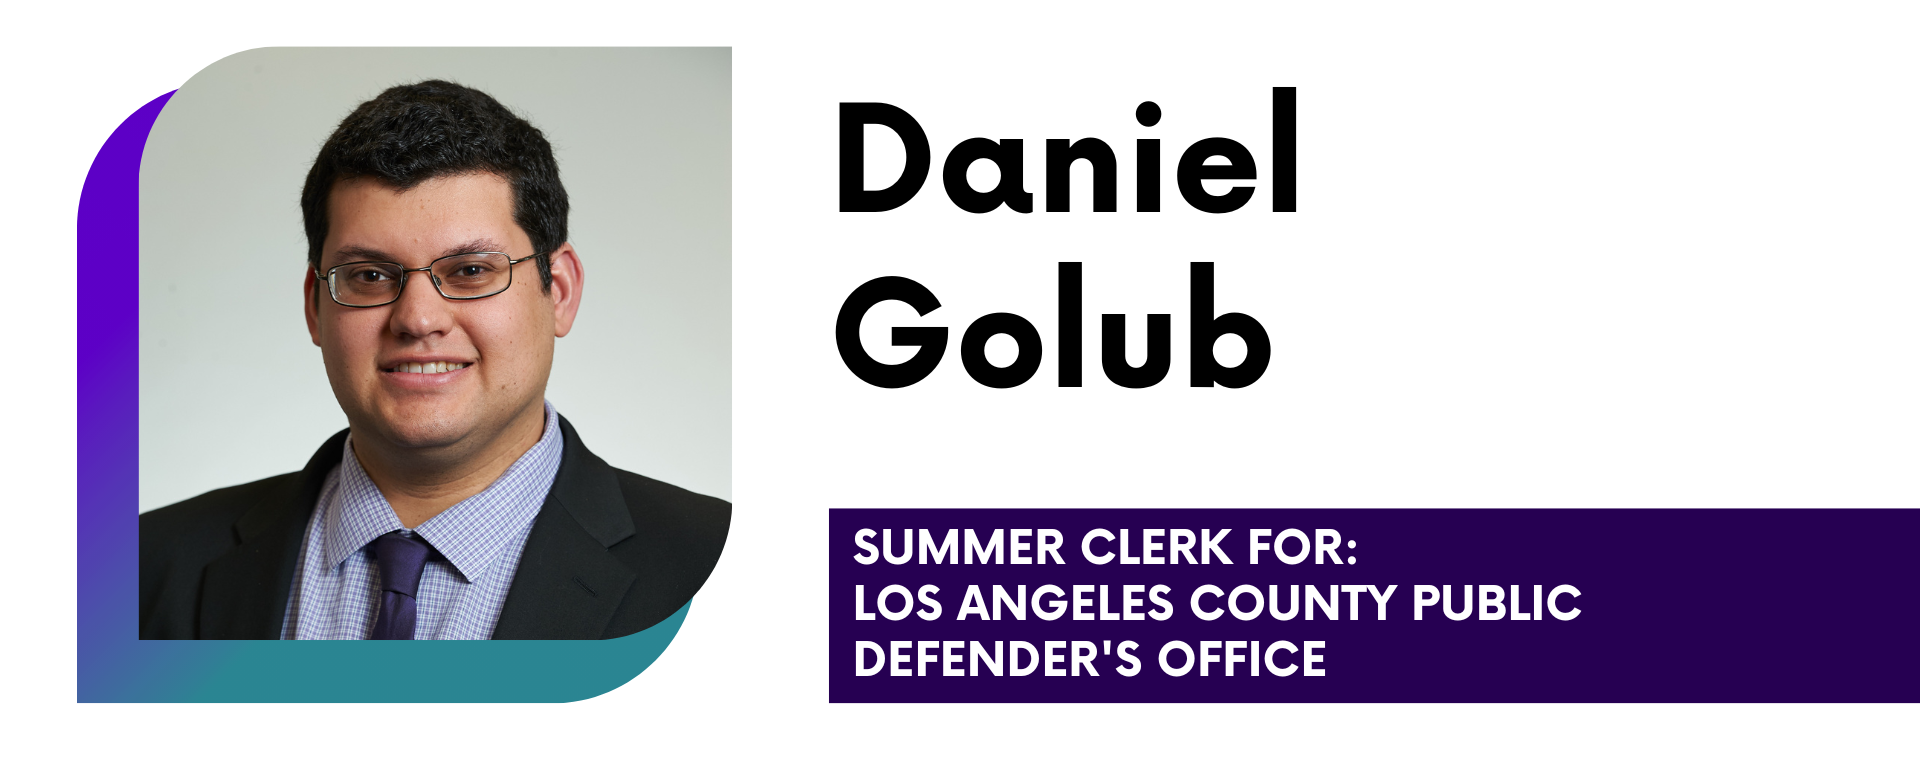 Daniel Golub Summer Clerk For: Los Angeles County Public Defender's Office